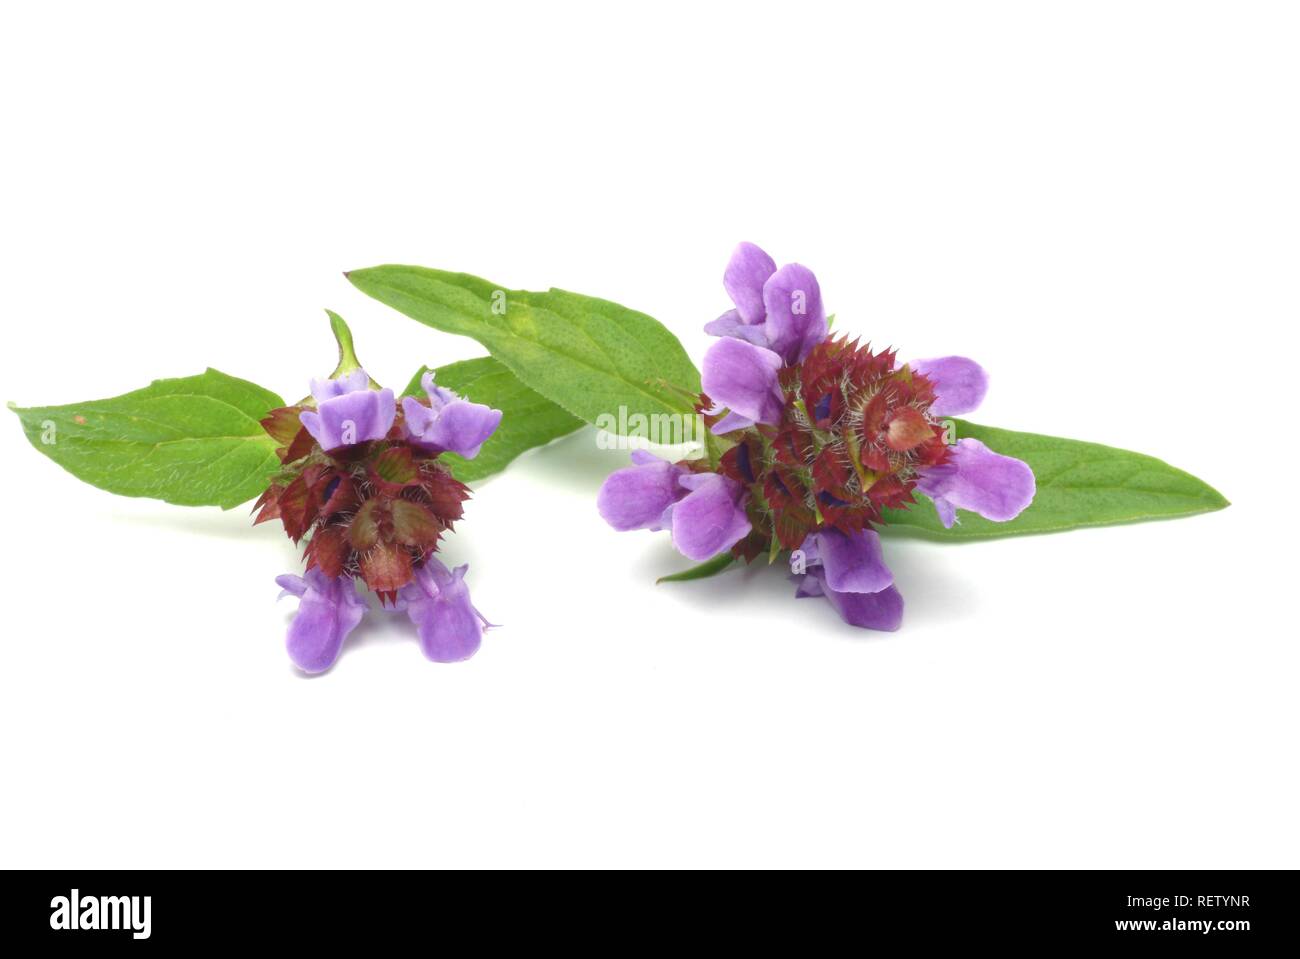 Common Selfheal (Prunella vulgaris), medicinal plant Stock Photo